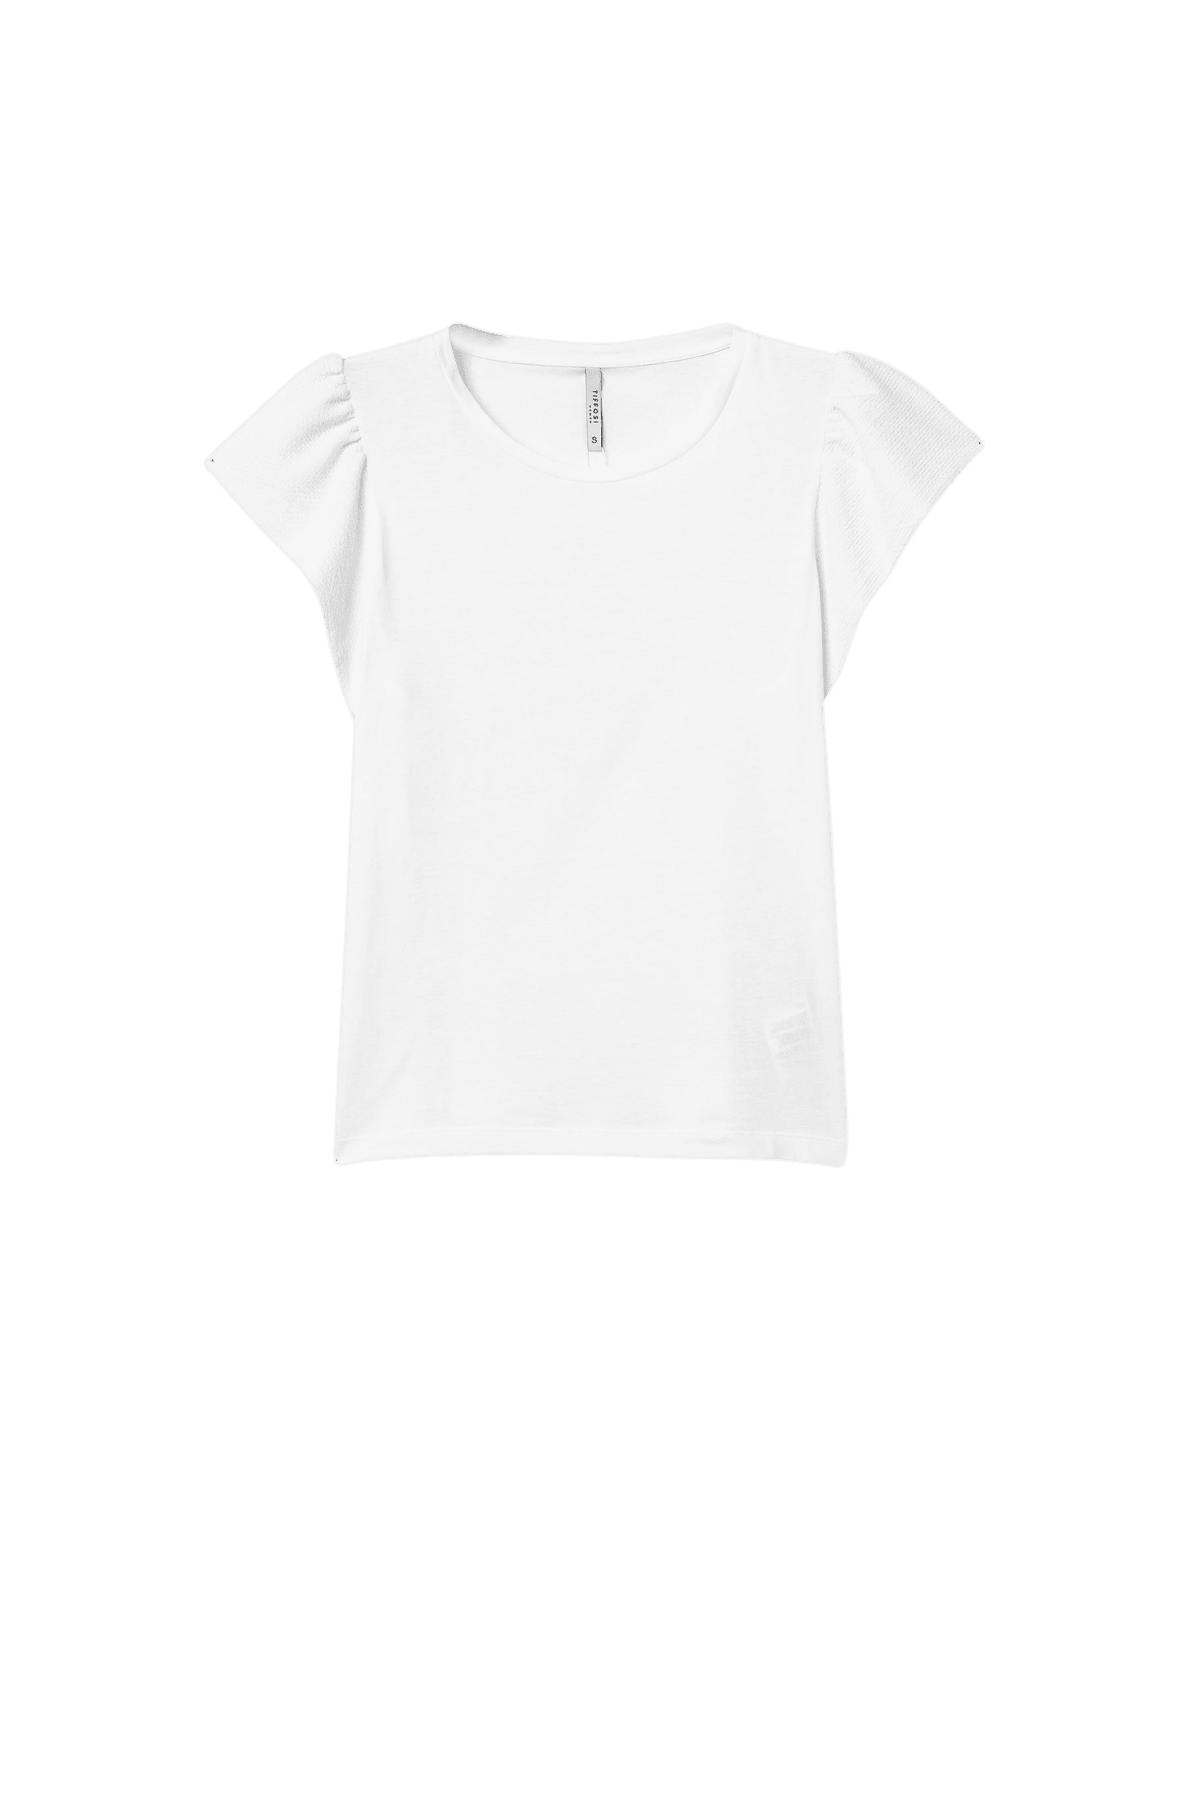 Camiseta TIFFOSI Kira 13 Blanca - ECRU